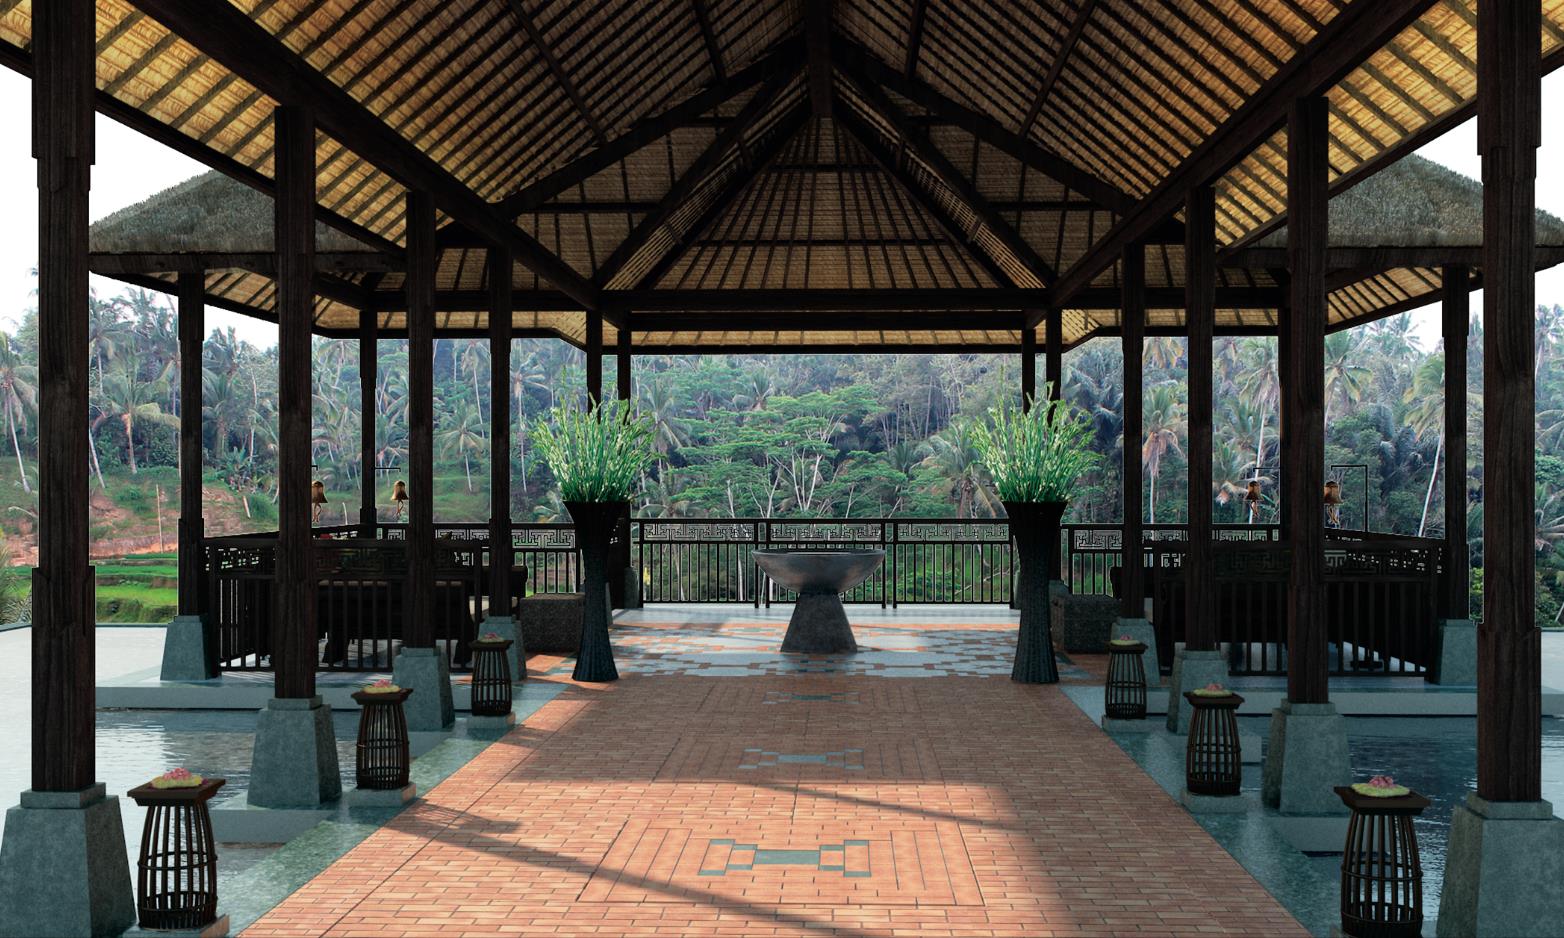 Mandapa, a Ritz-Carlton Reserve